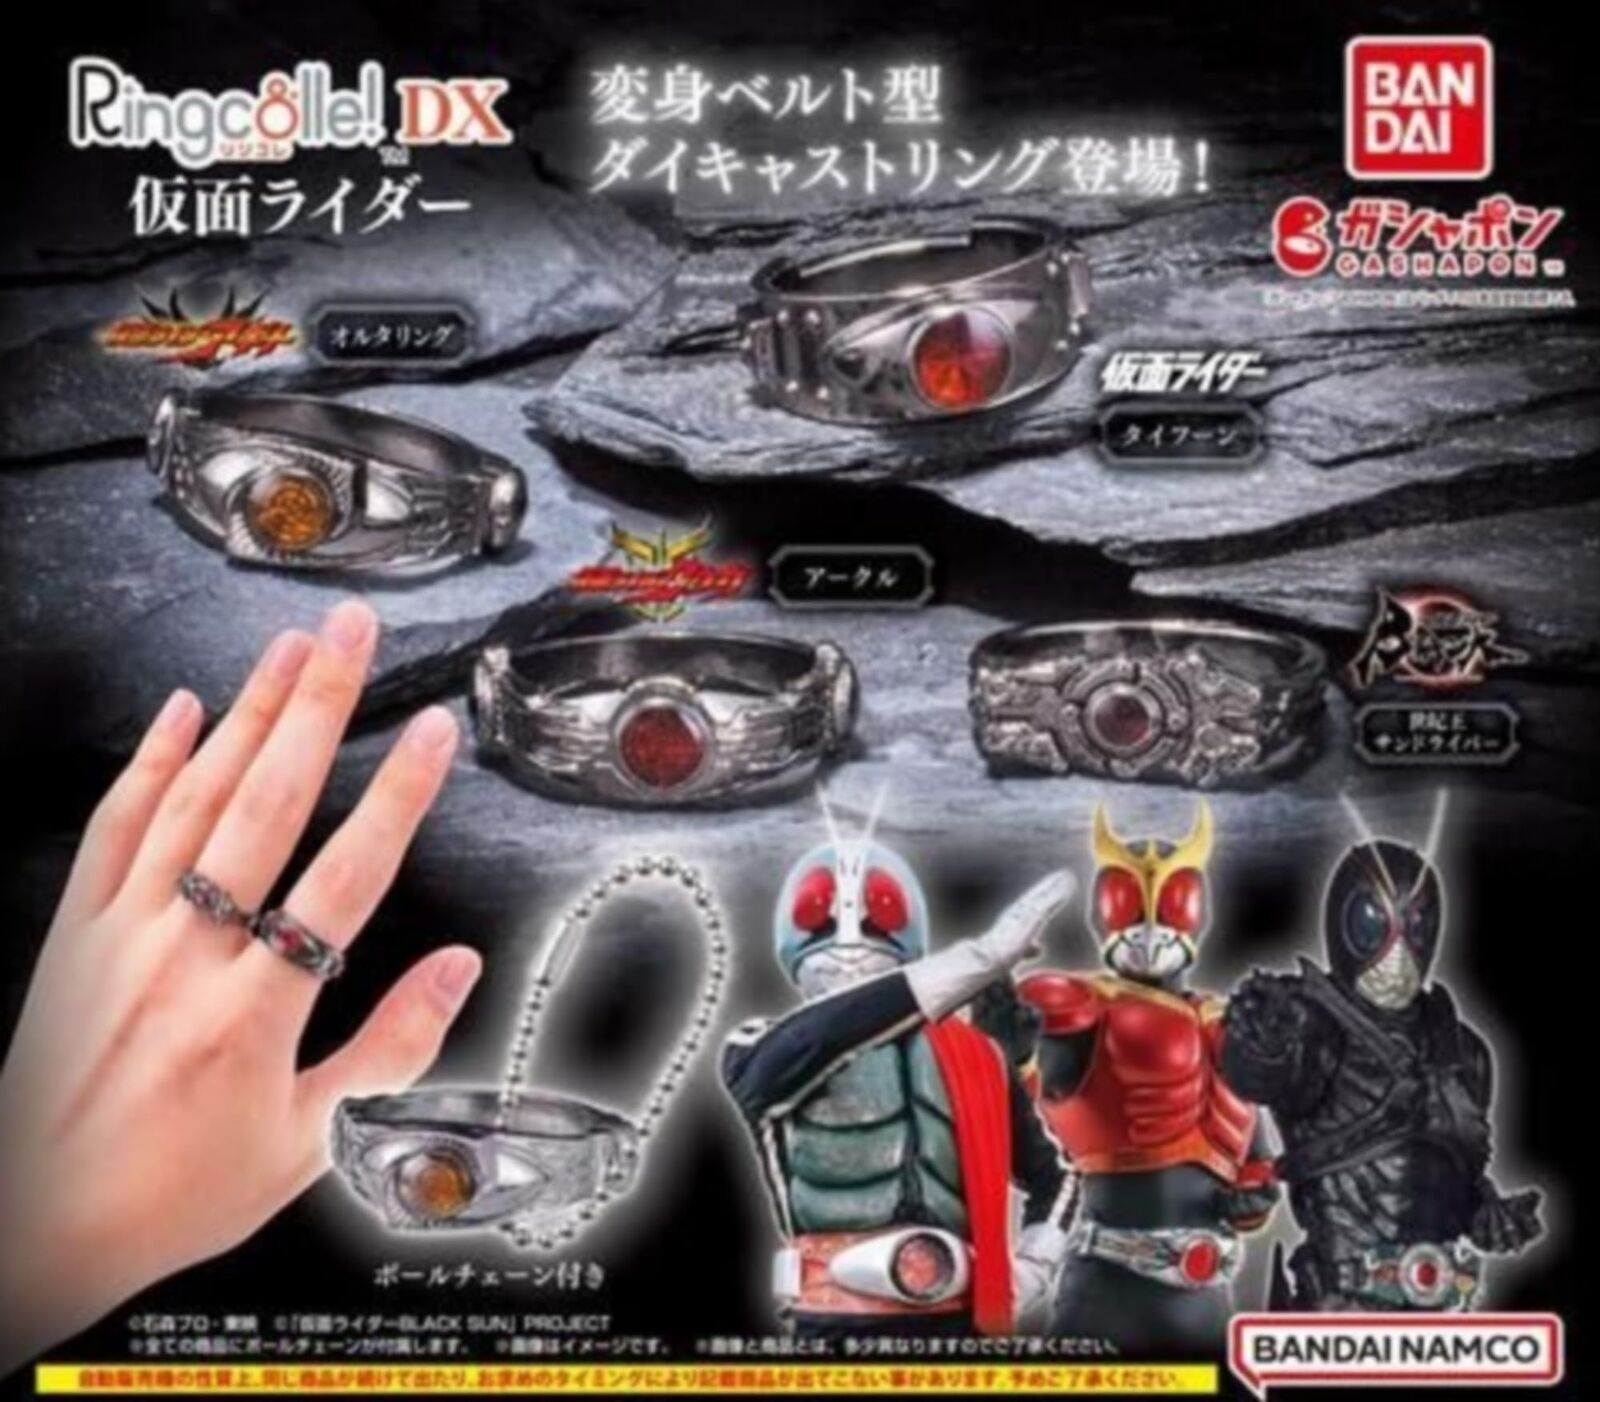 Ringcolle DX Kamen Rider x All 4 Types Set Full Comp Gacha Gacha Capsule Toy